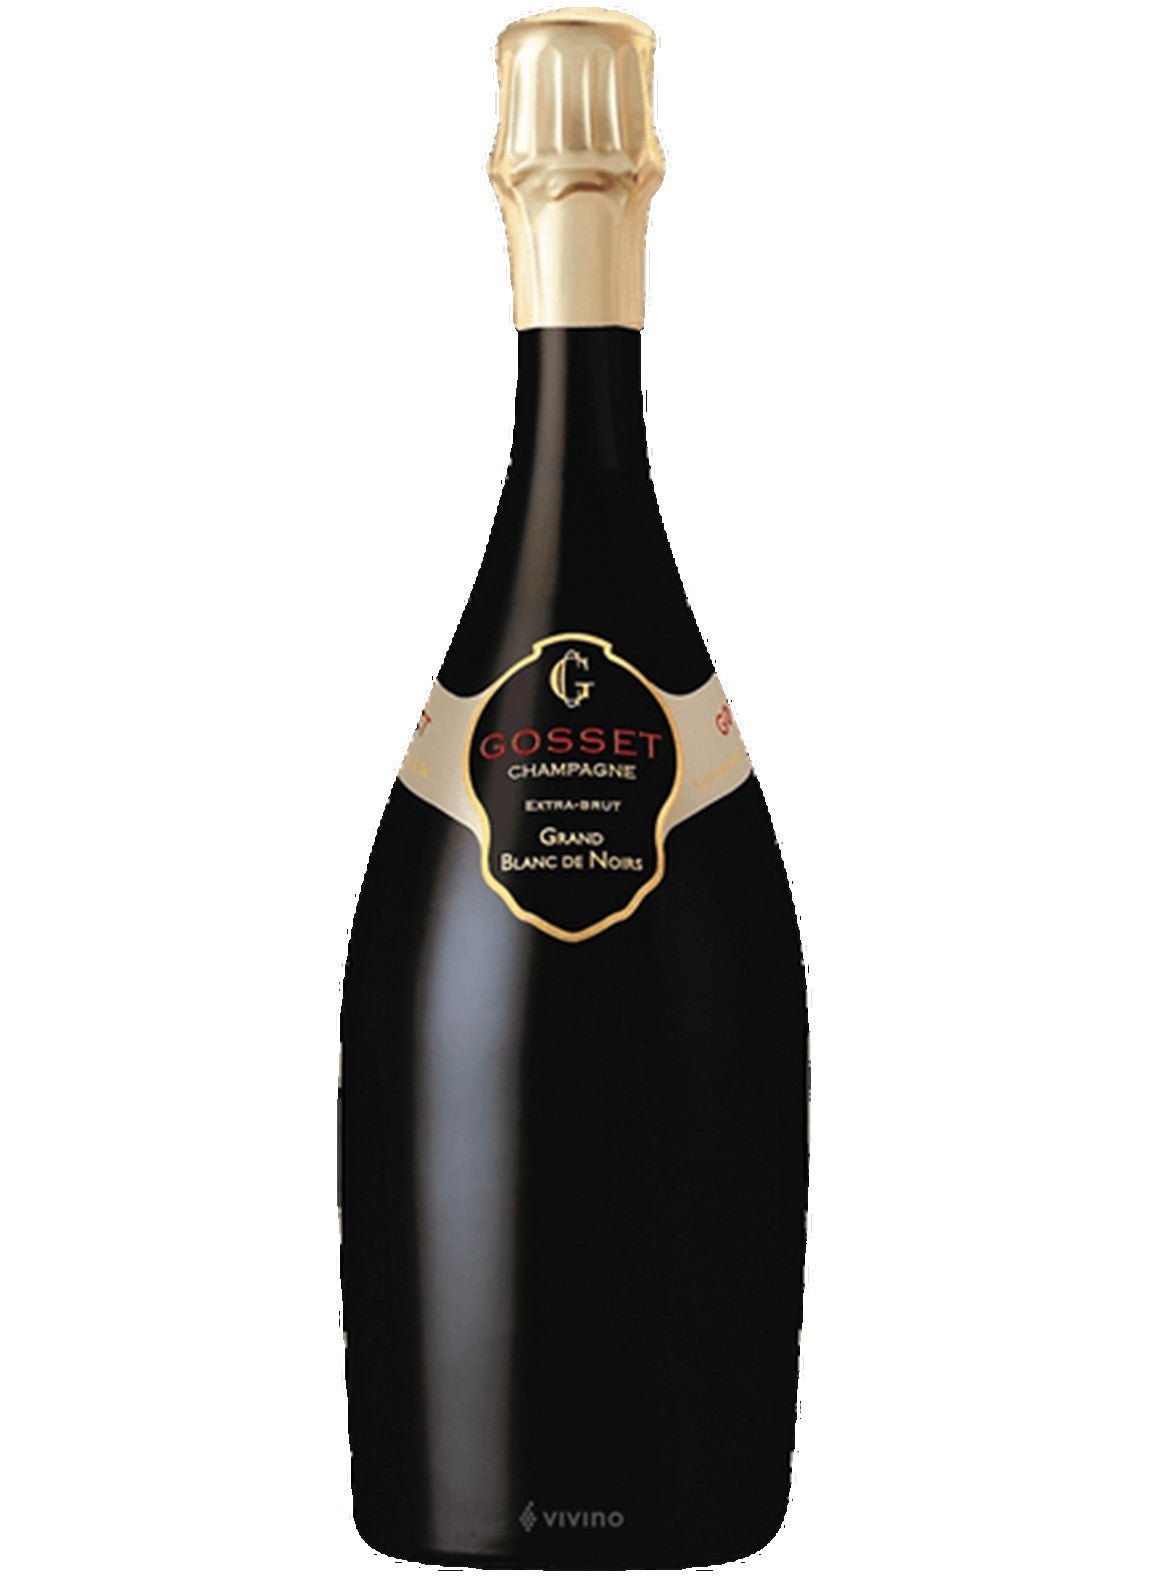 Gosset Blanc de Noirs NV Champagne - Wine France Champagne - Liquor Wine Cave